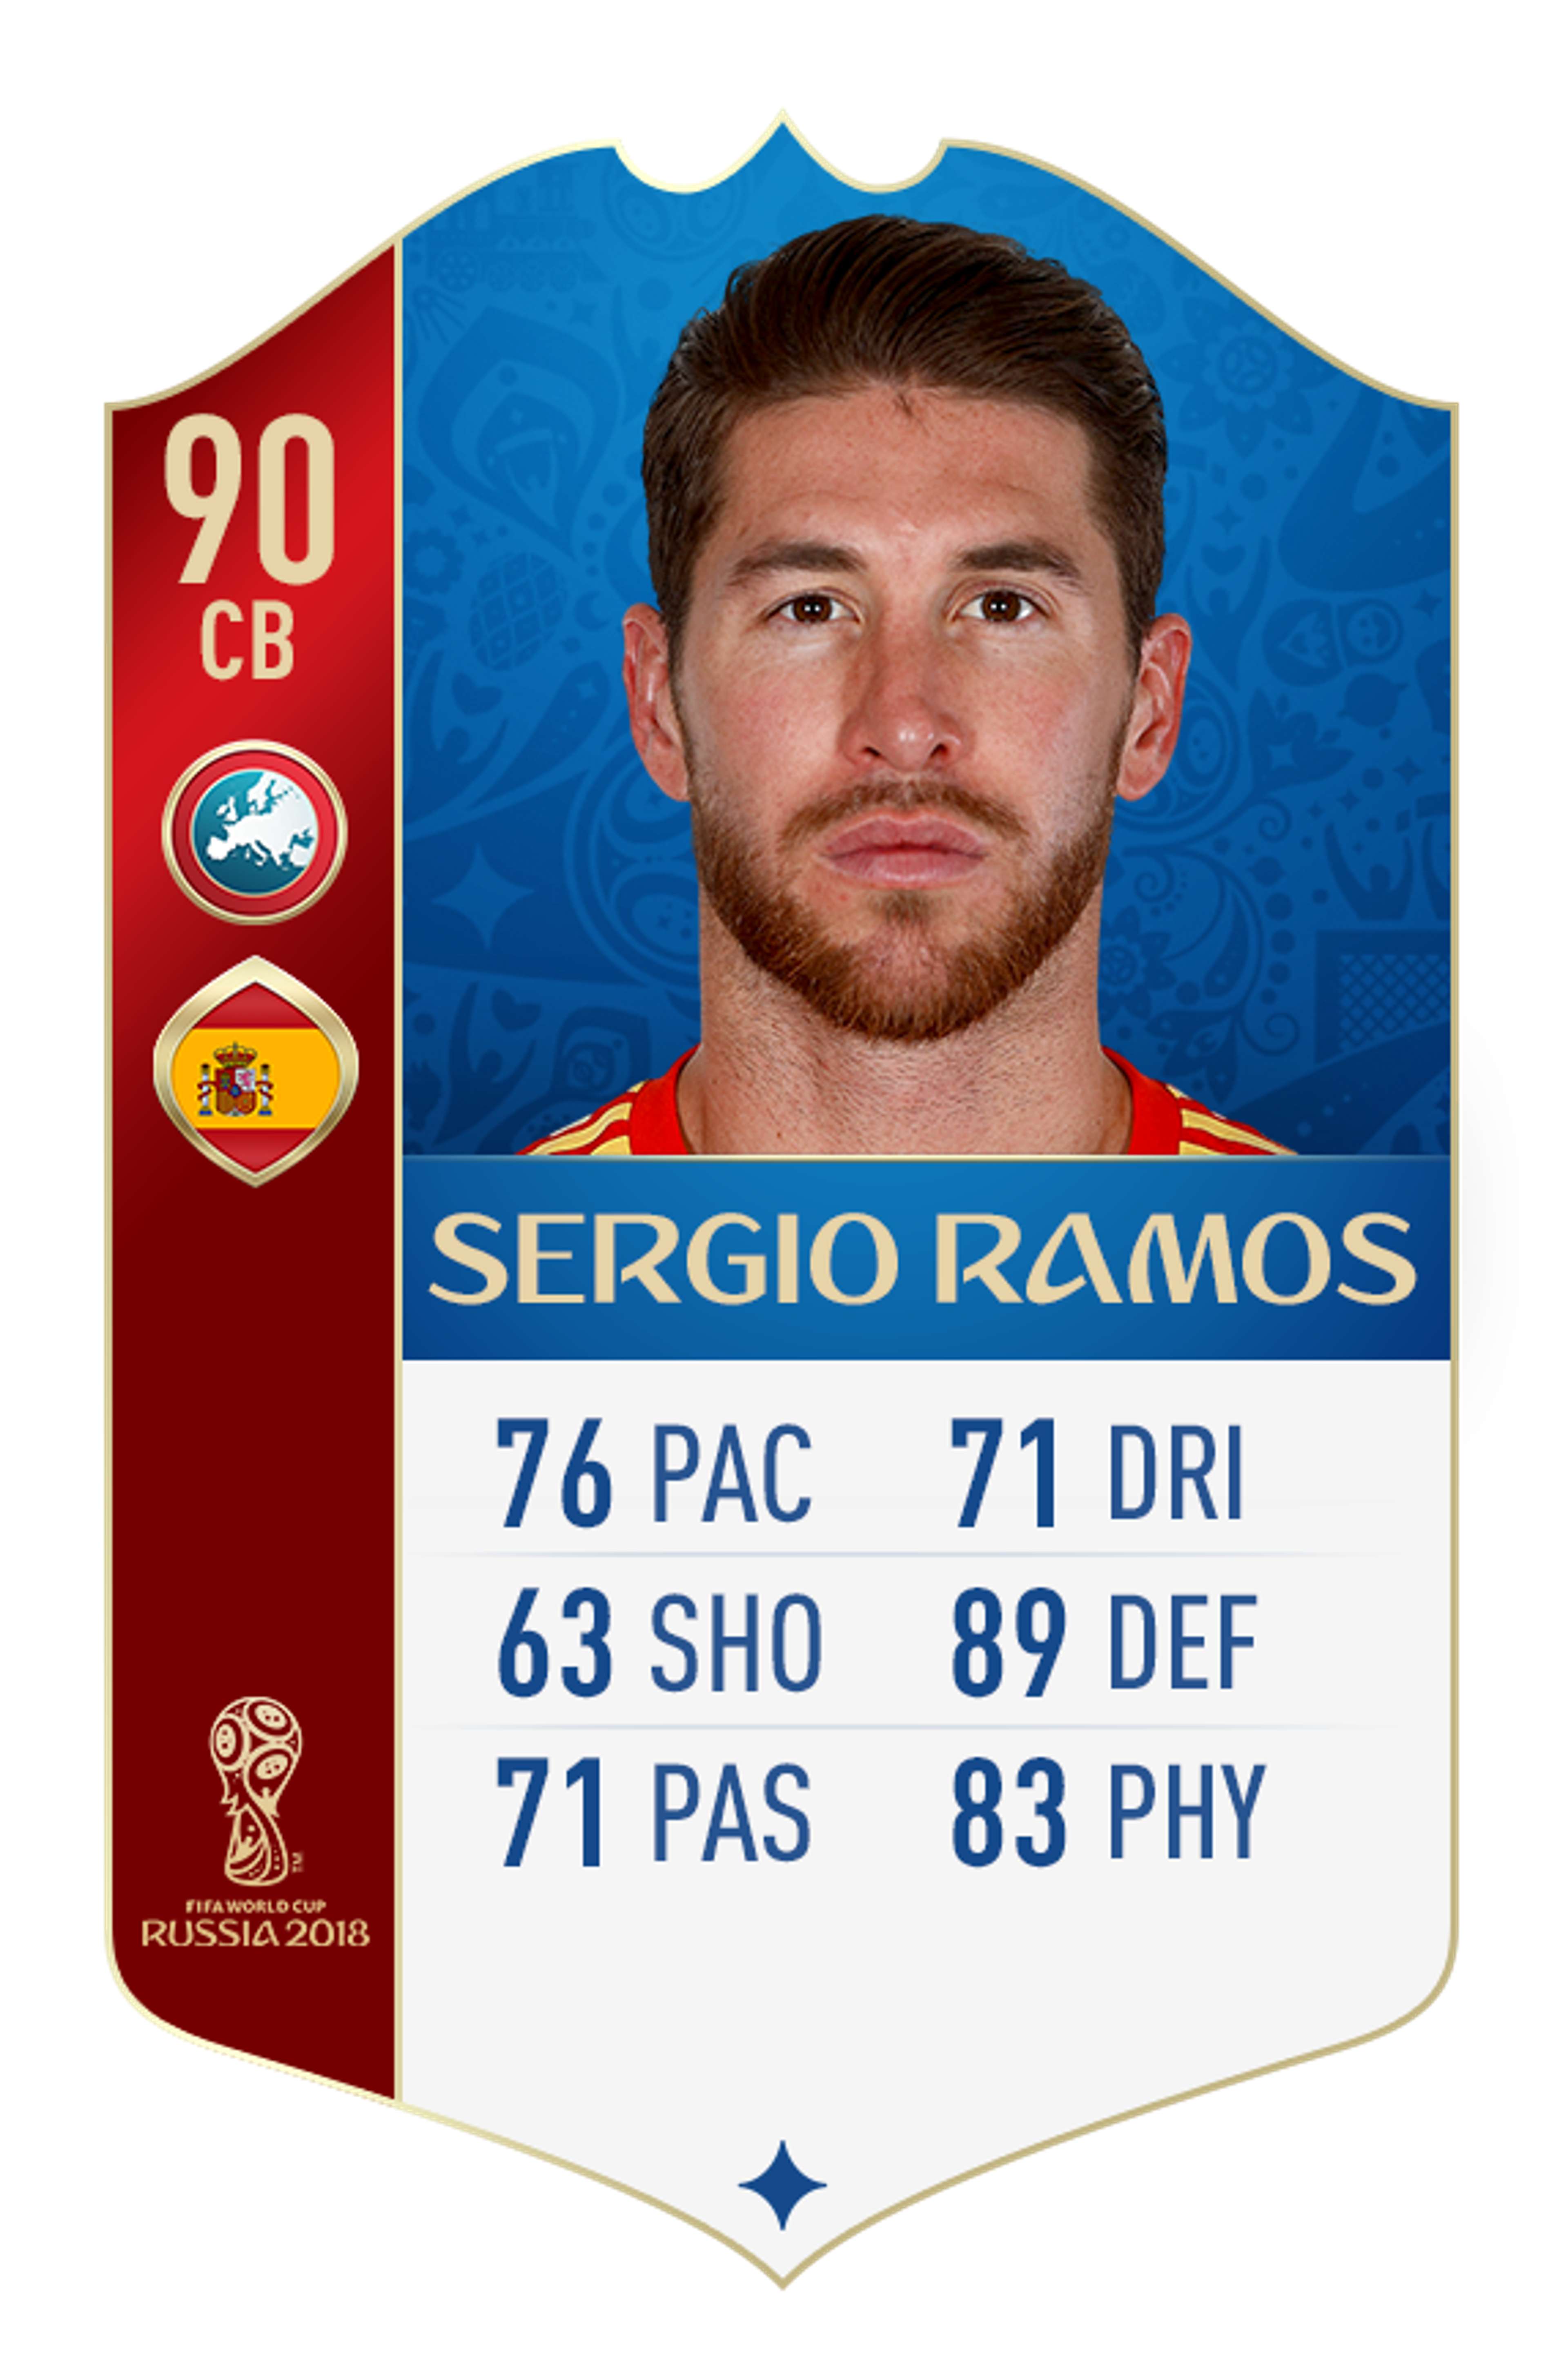 Sergio Ramos FIFA 18 World Cup rating